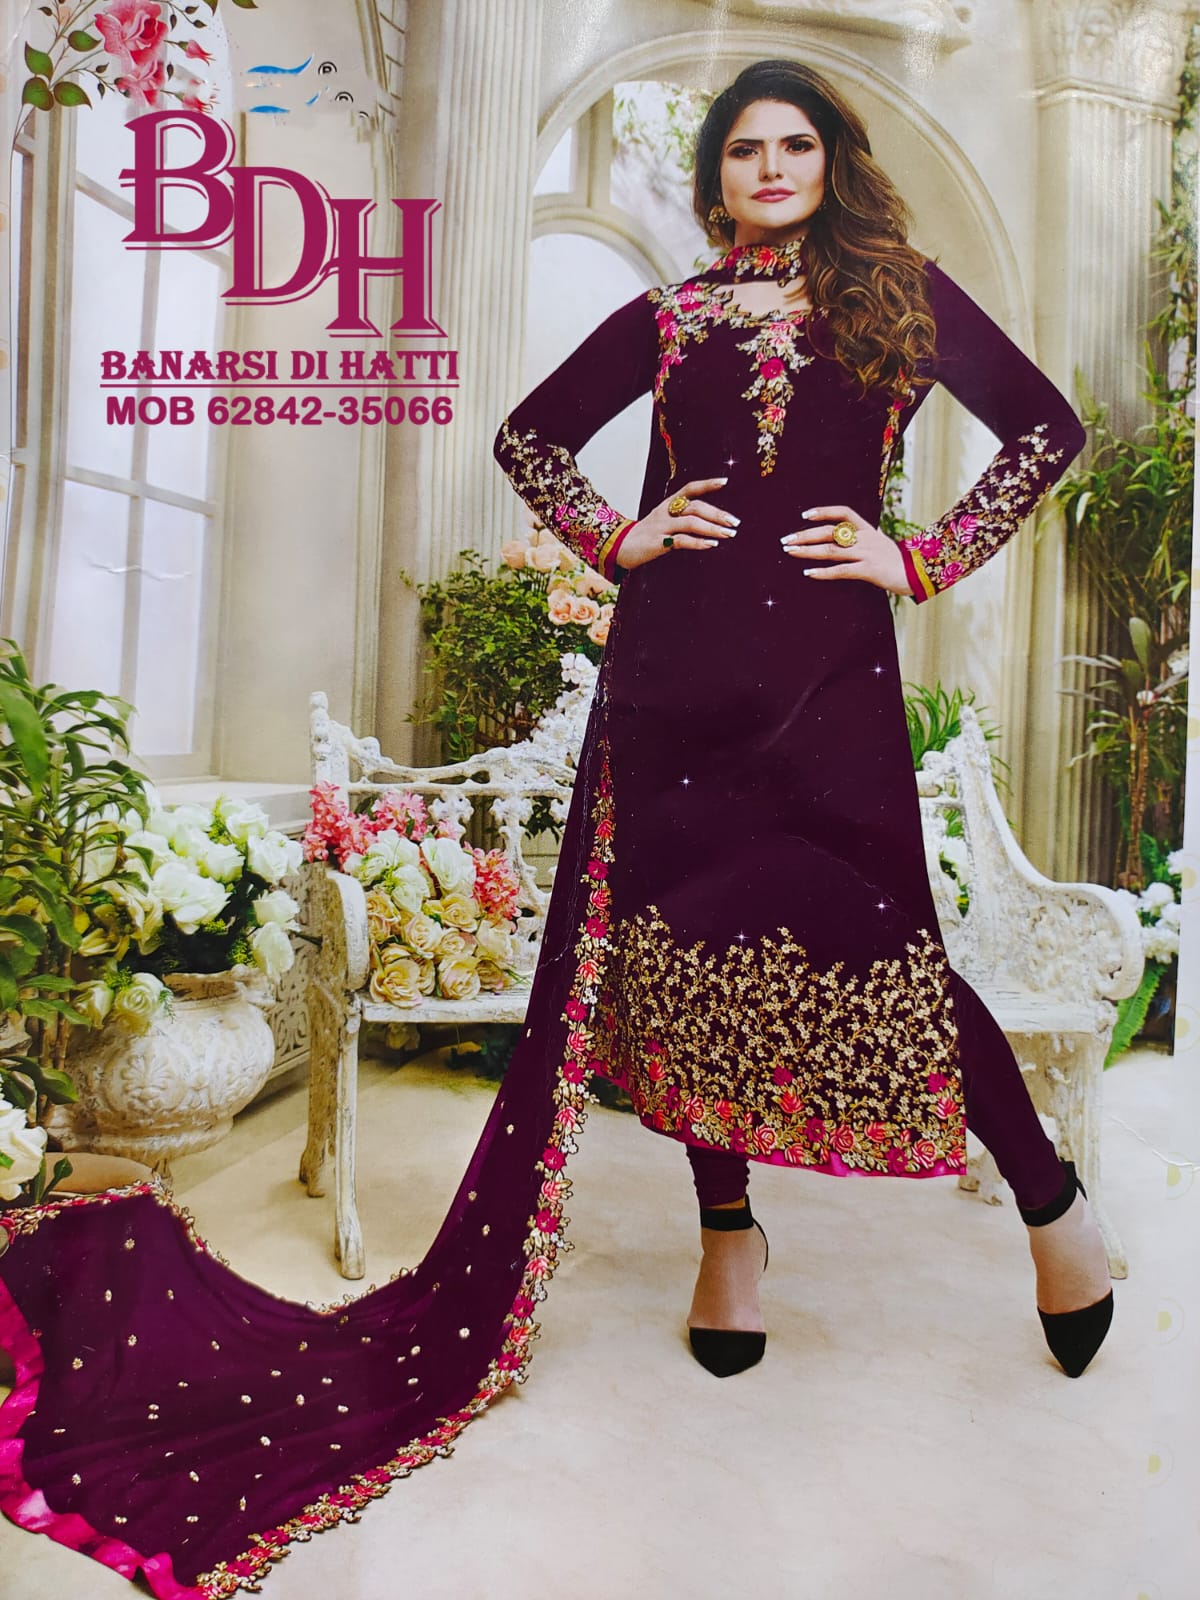 Brocade Punjabi Suit/Banarsi Suit Designing and Colour combination ideas |  Punjabi suits, Suit designs, Banarsi suit design